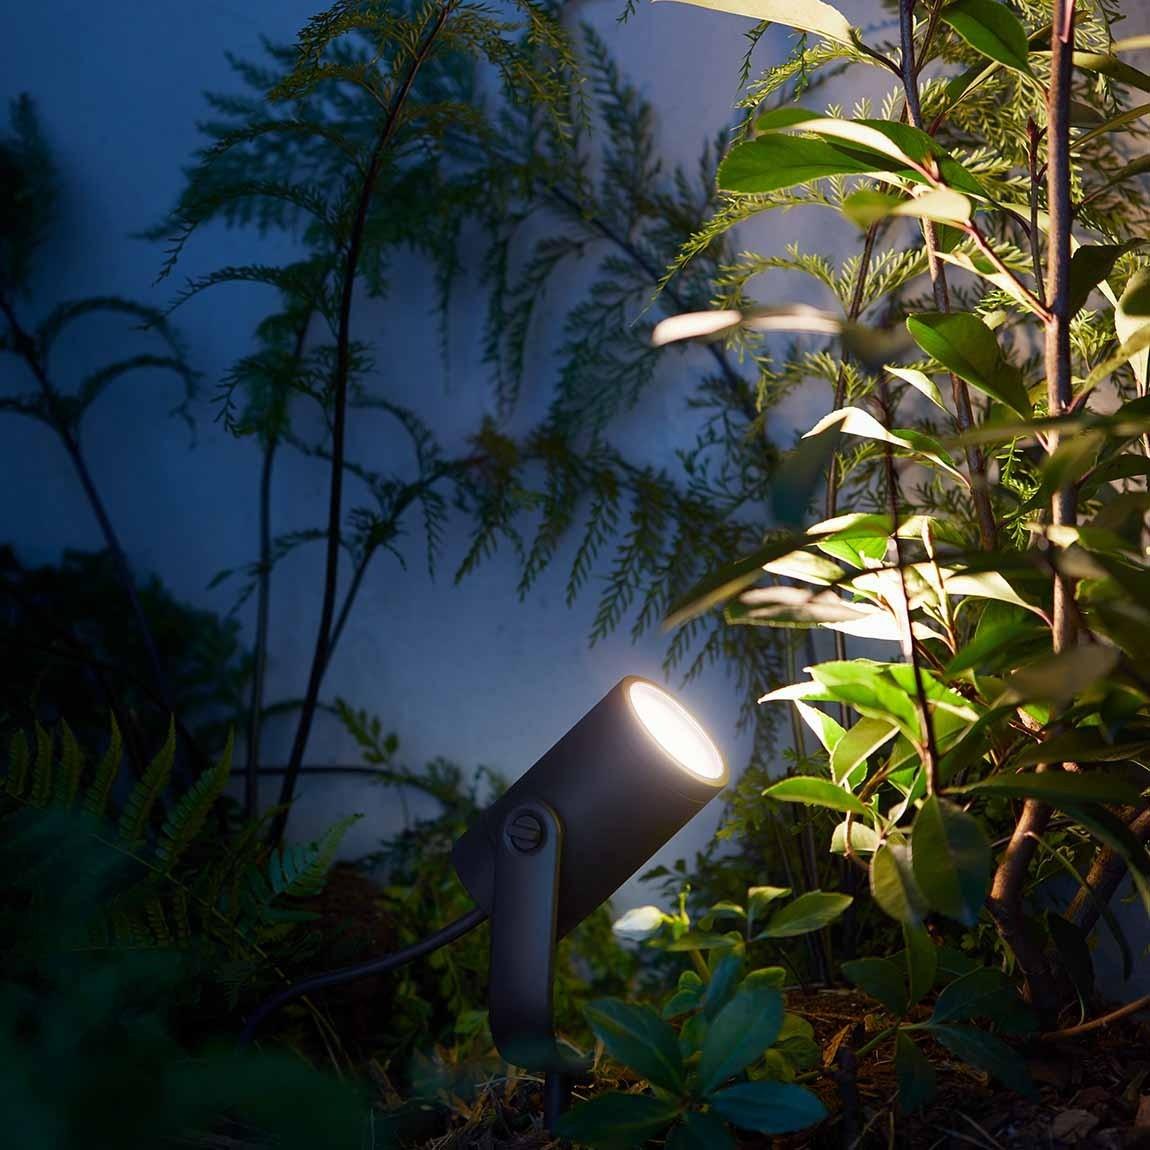 Philips Hue LED Spot Lily 1flg. 700lm Base Kit - Schwarz, im Garten bei Nacht